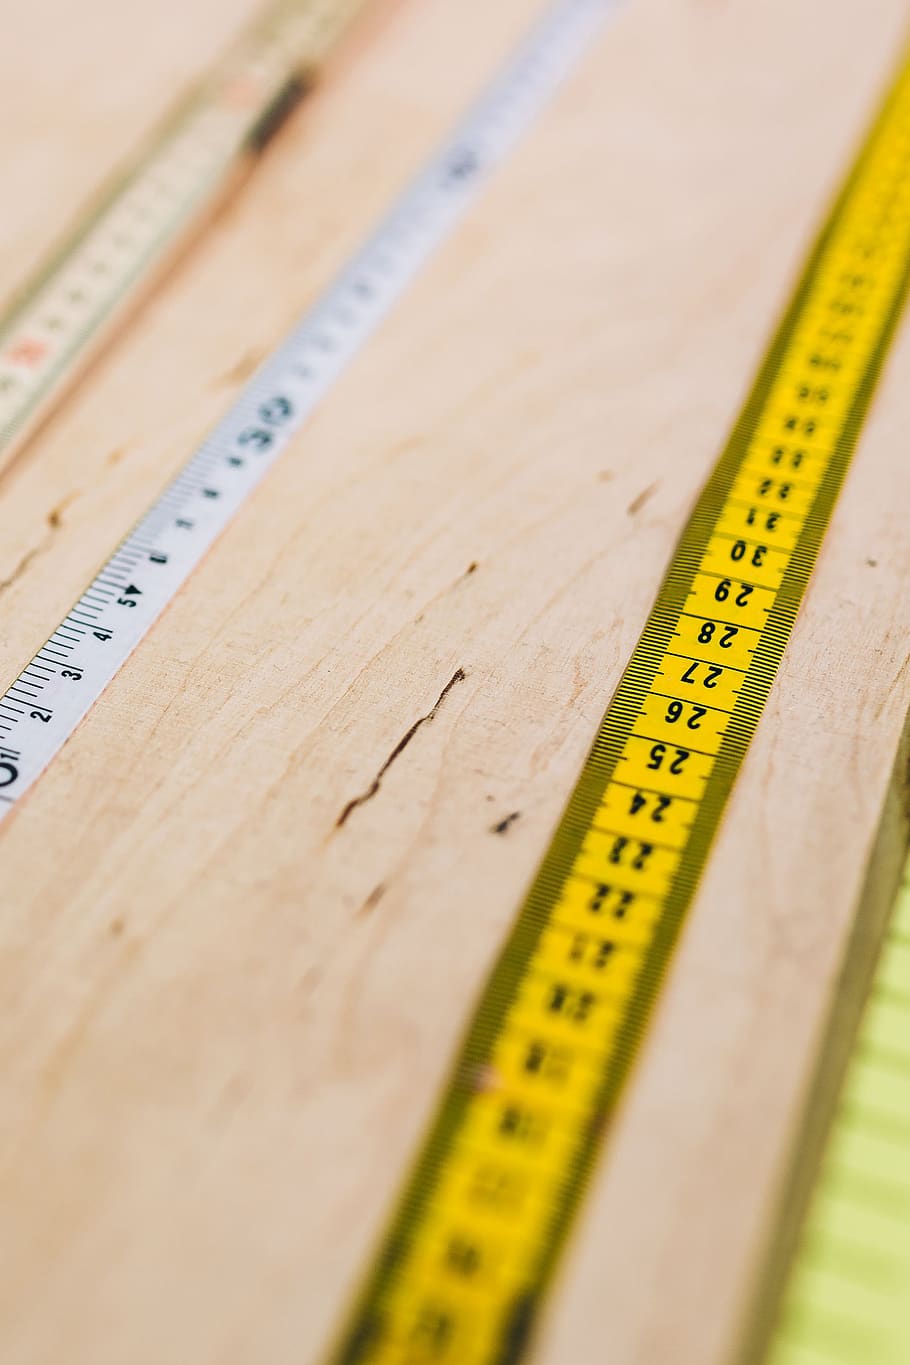 merapatkan, kayu, penggaris, mengukur, alat, matematika, nomor, panjang, menghitung, Close-up